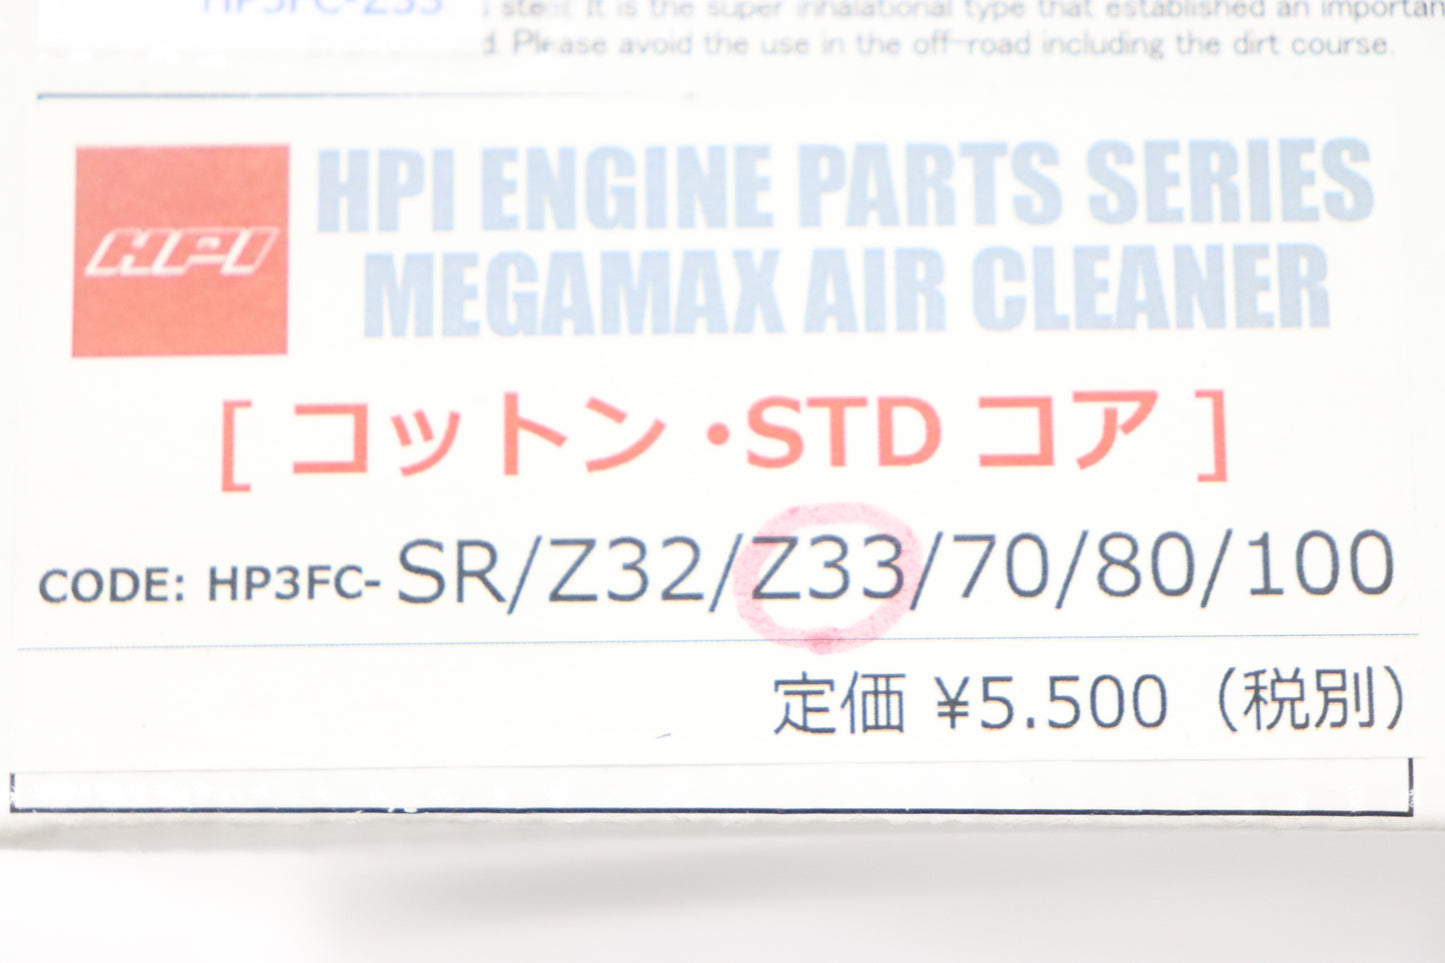 HPI Megamax Air Cleaner Cotton Z33 Air Flow Standard Core ##178122292